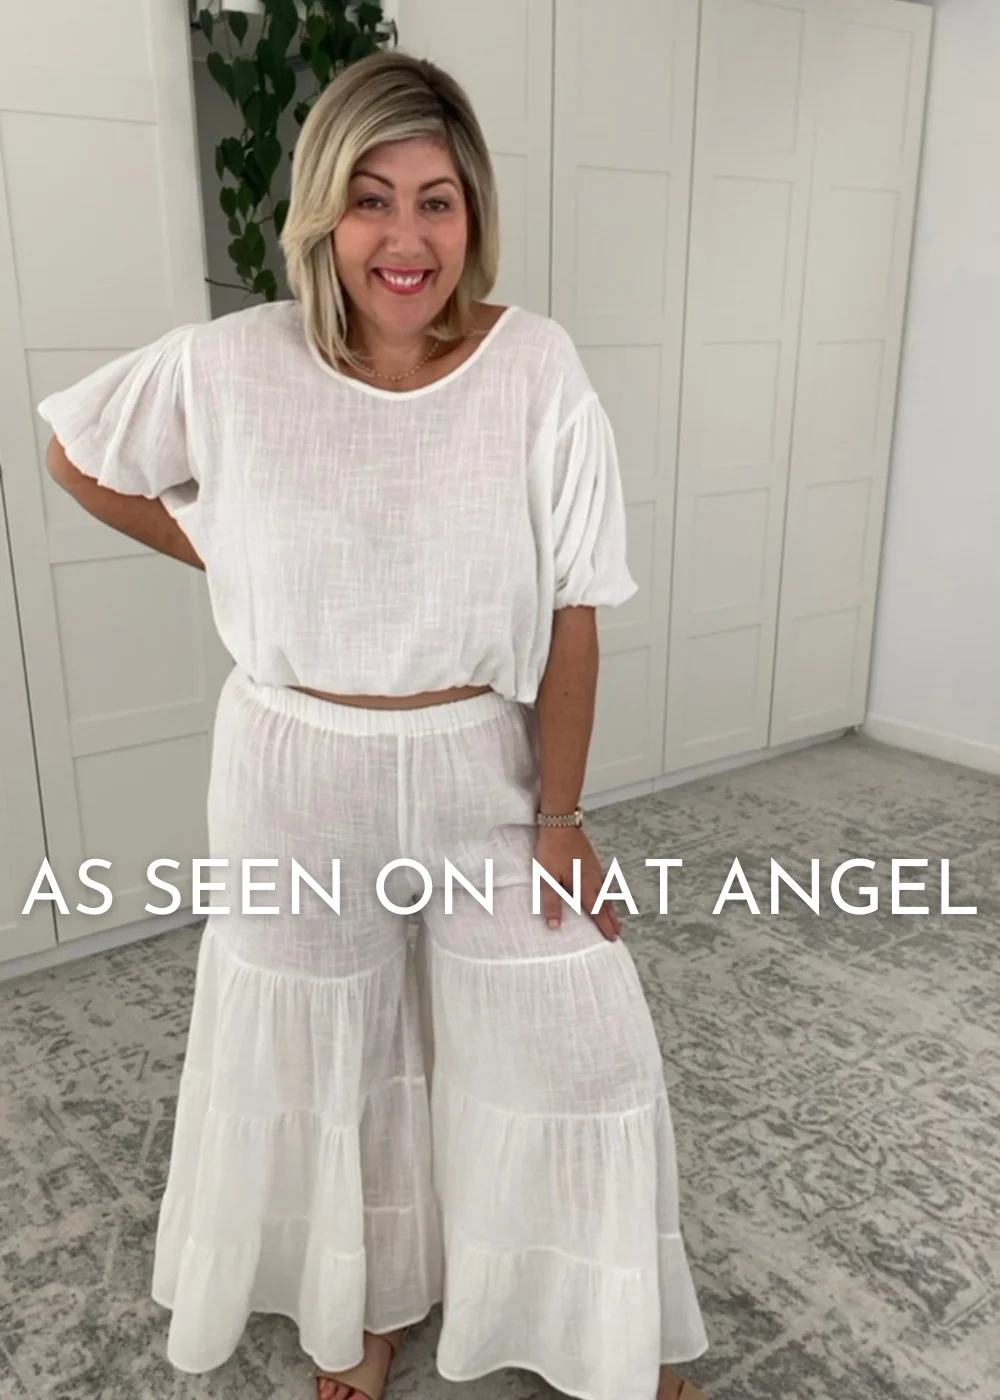 Nat Angel reviews the Salt + Soda Milan Dress on Vimeo